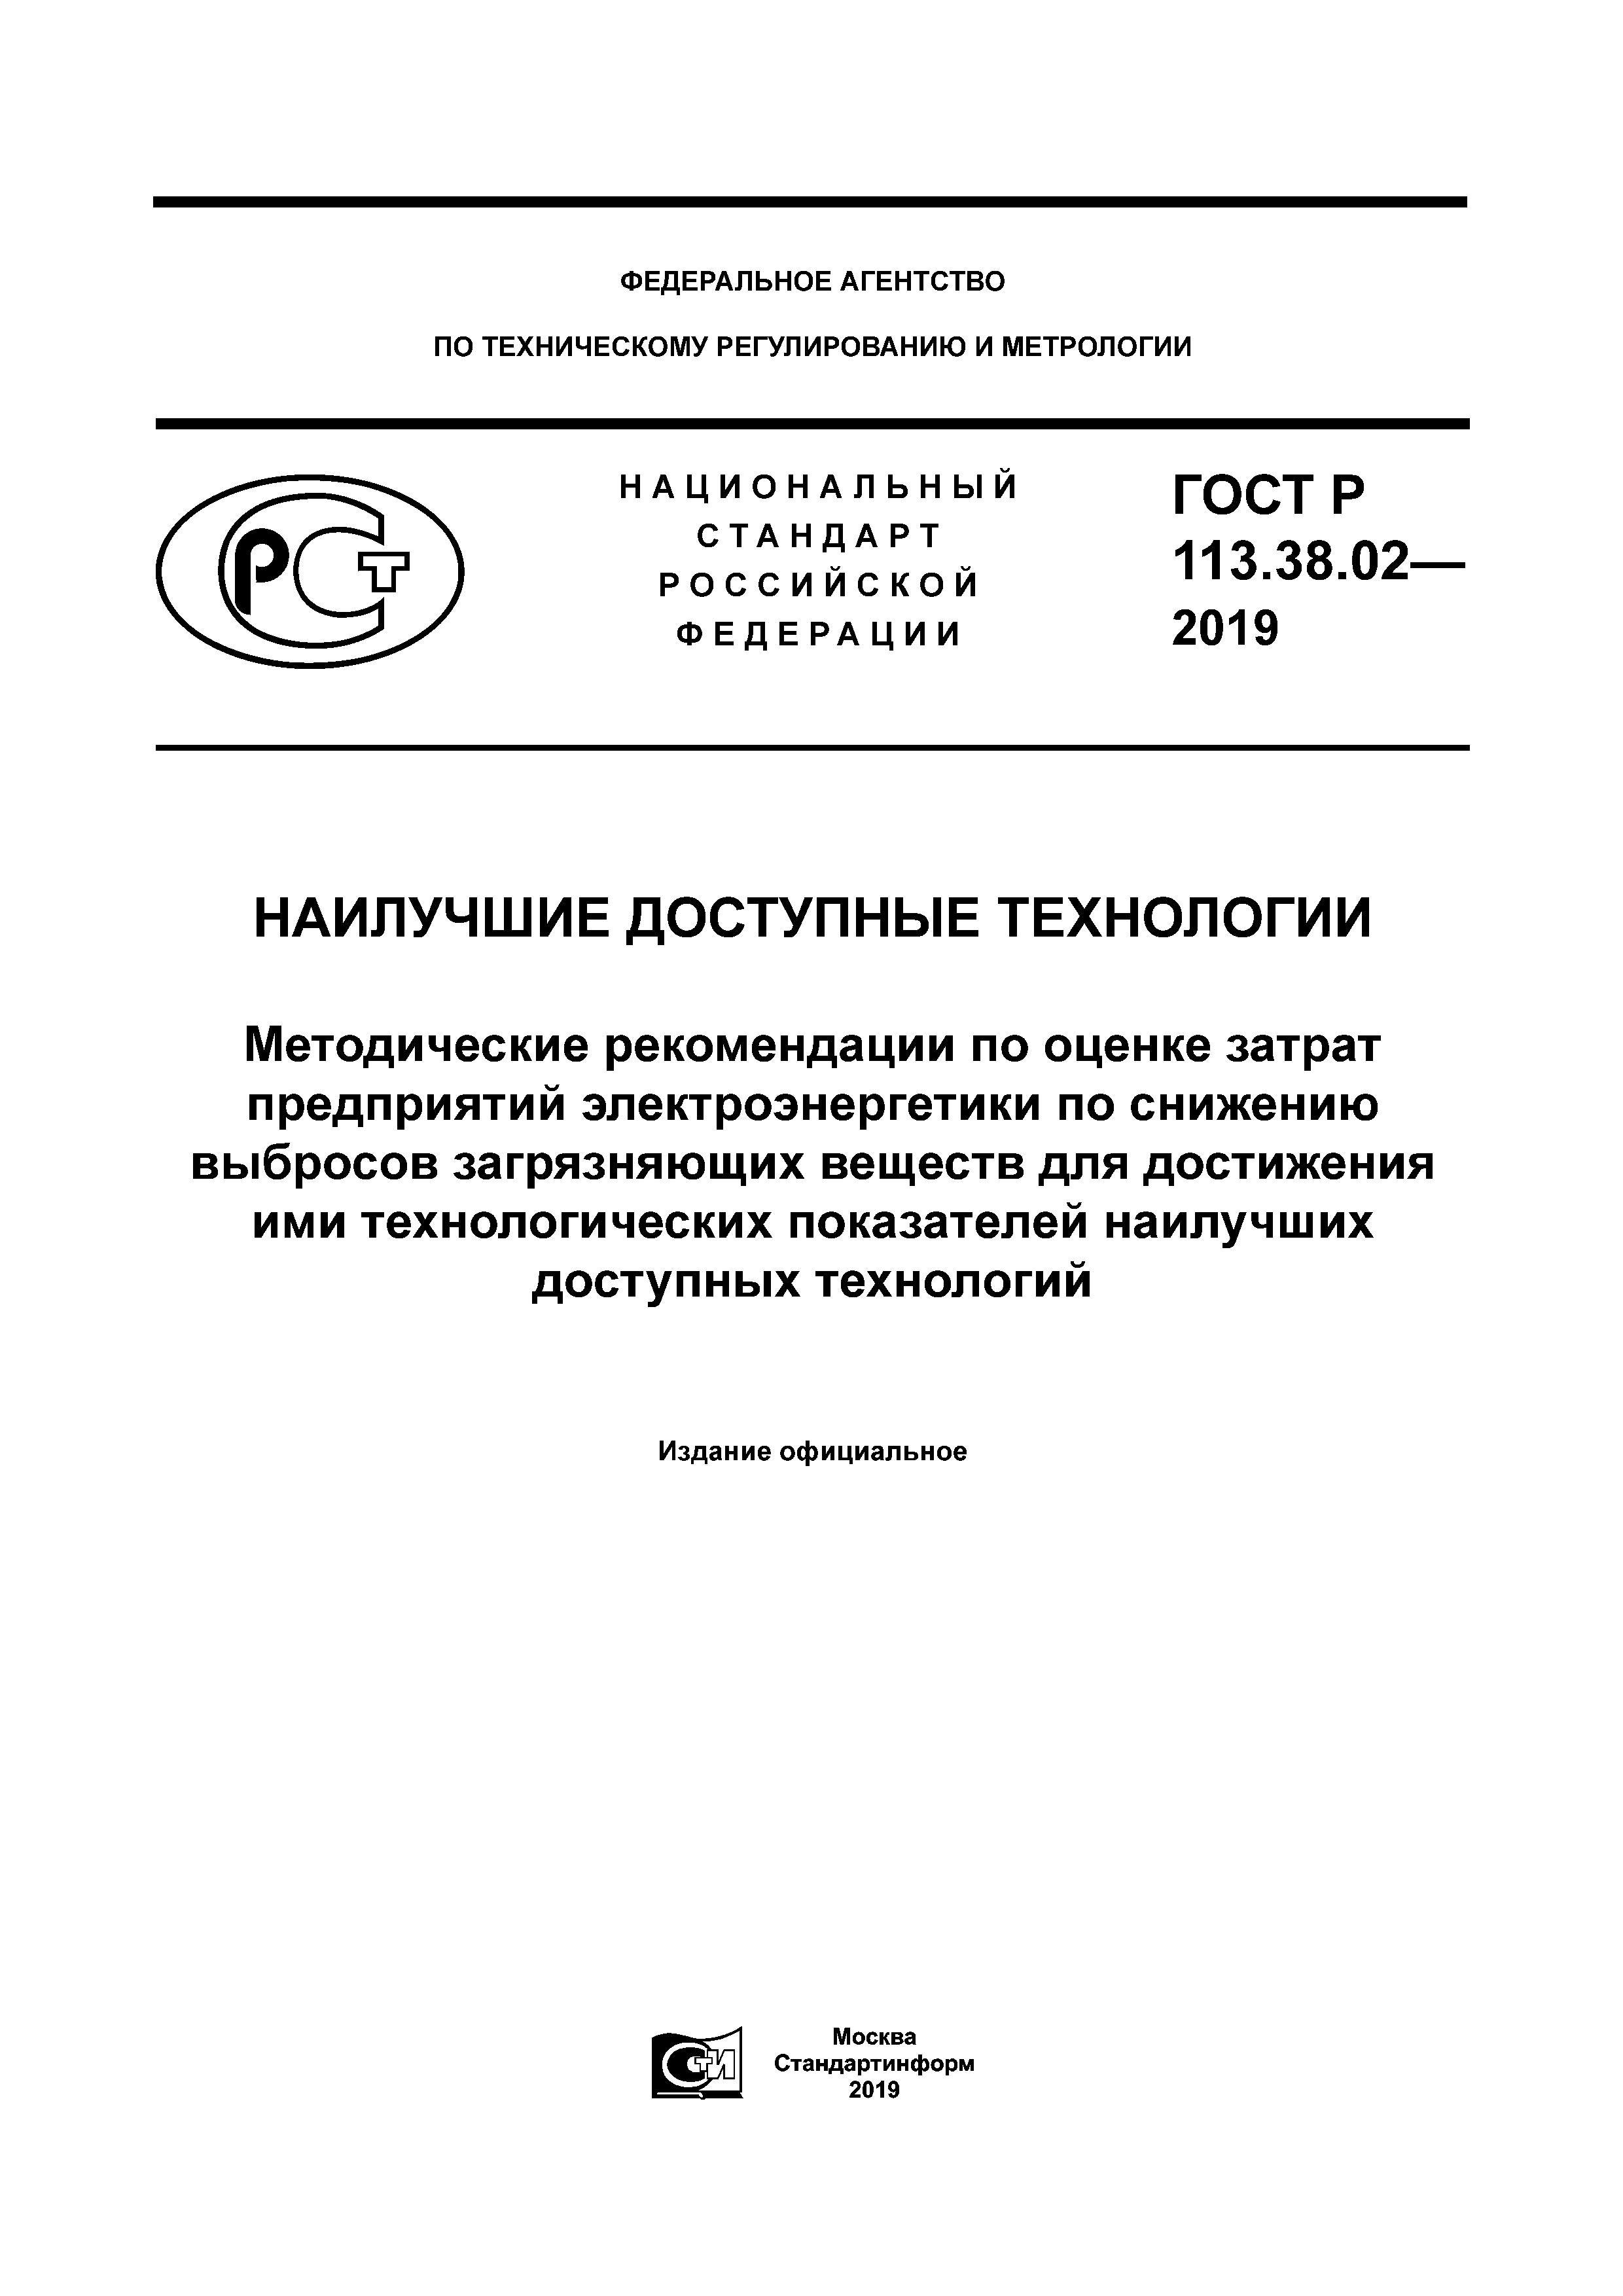 ГОСТ Р 113.38.02-2019